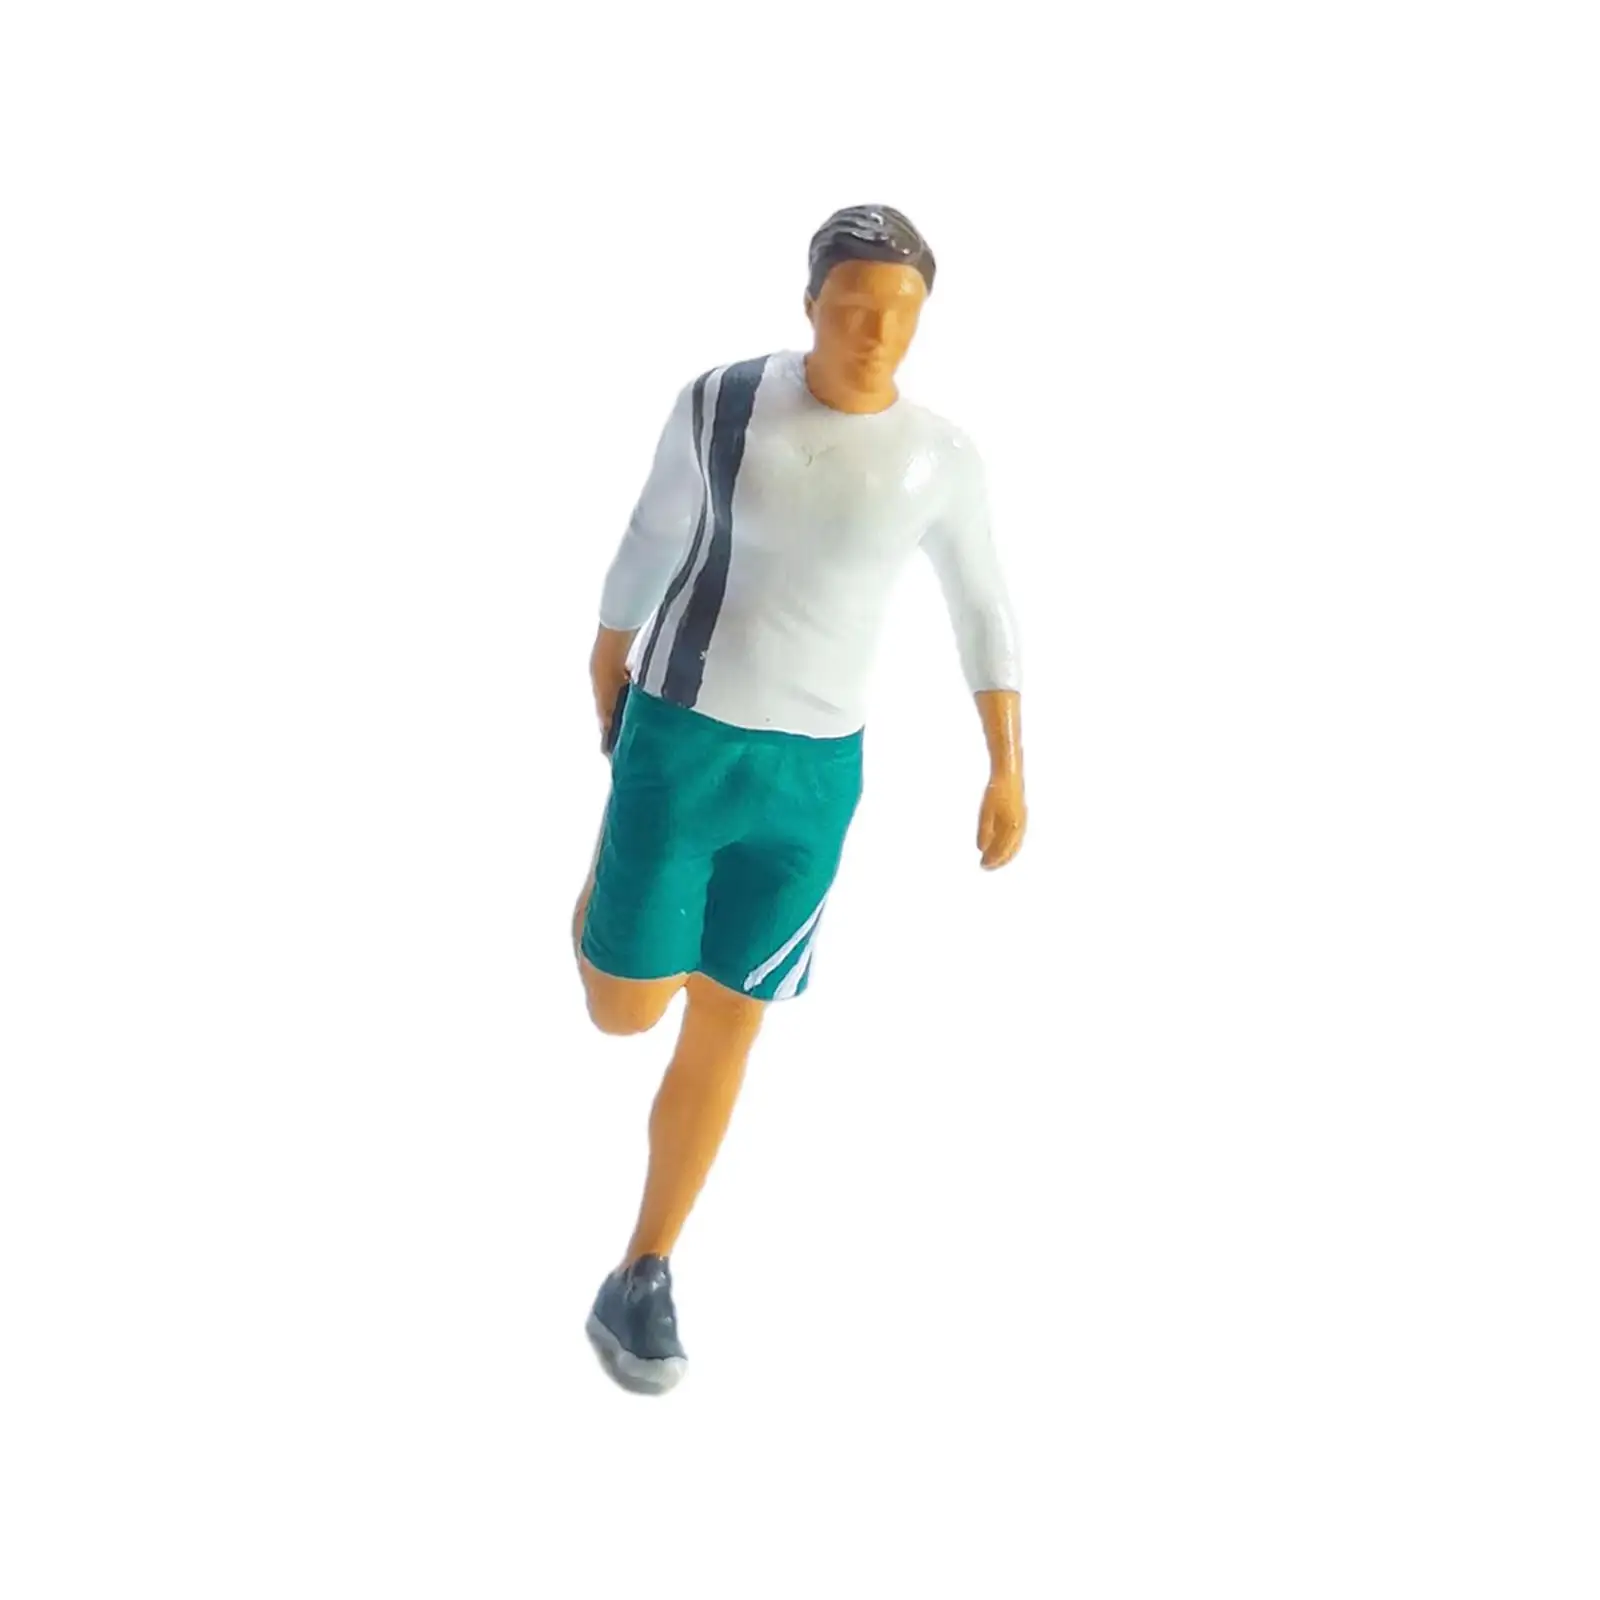 1/64 Scale Miniature Model Figure Simulation Figurines 1:64 Figure for DIY Projects Sand Table DIY Scene Diorama Layout